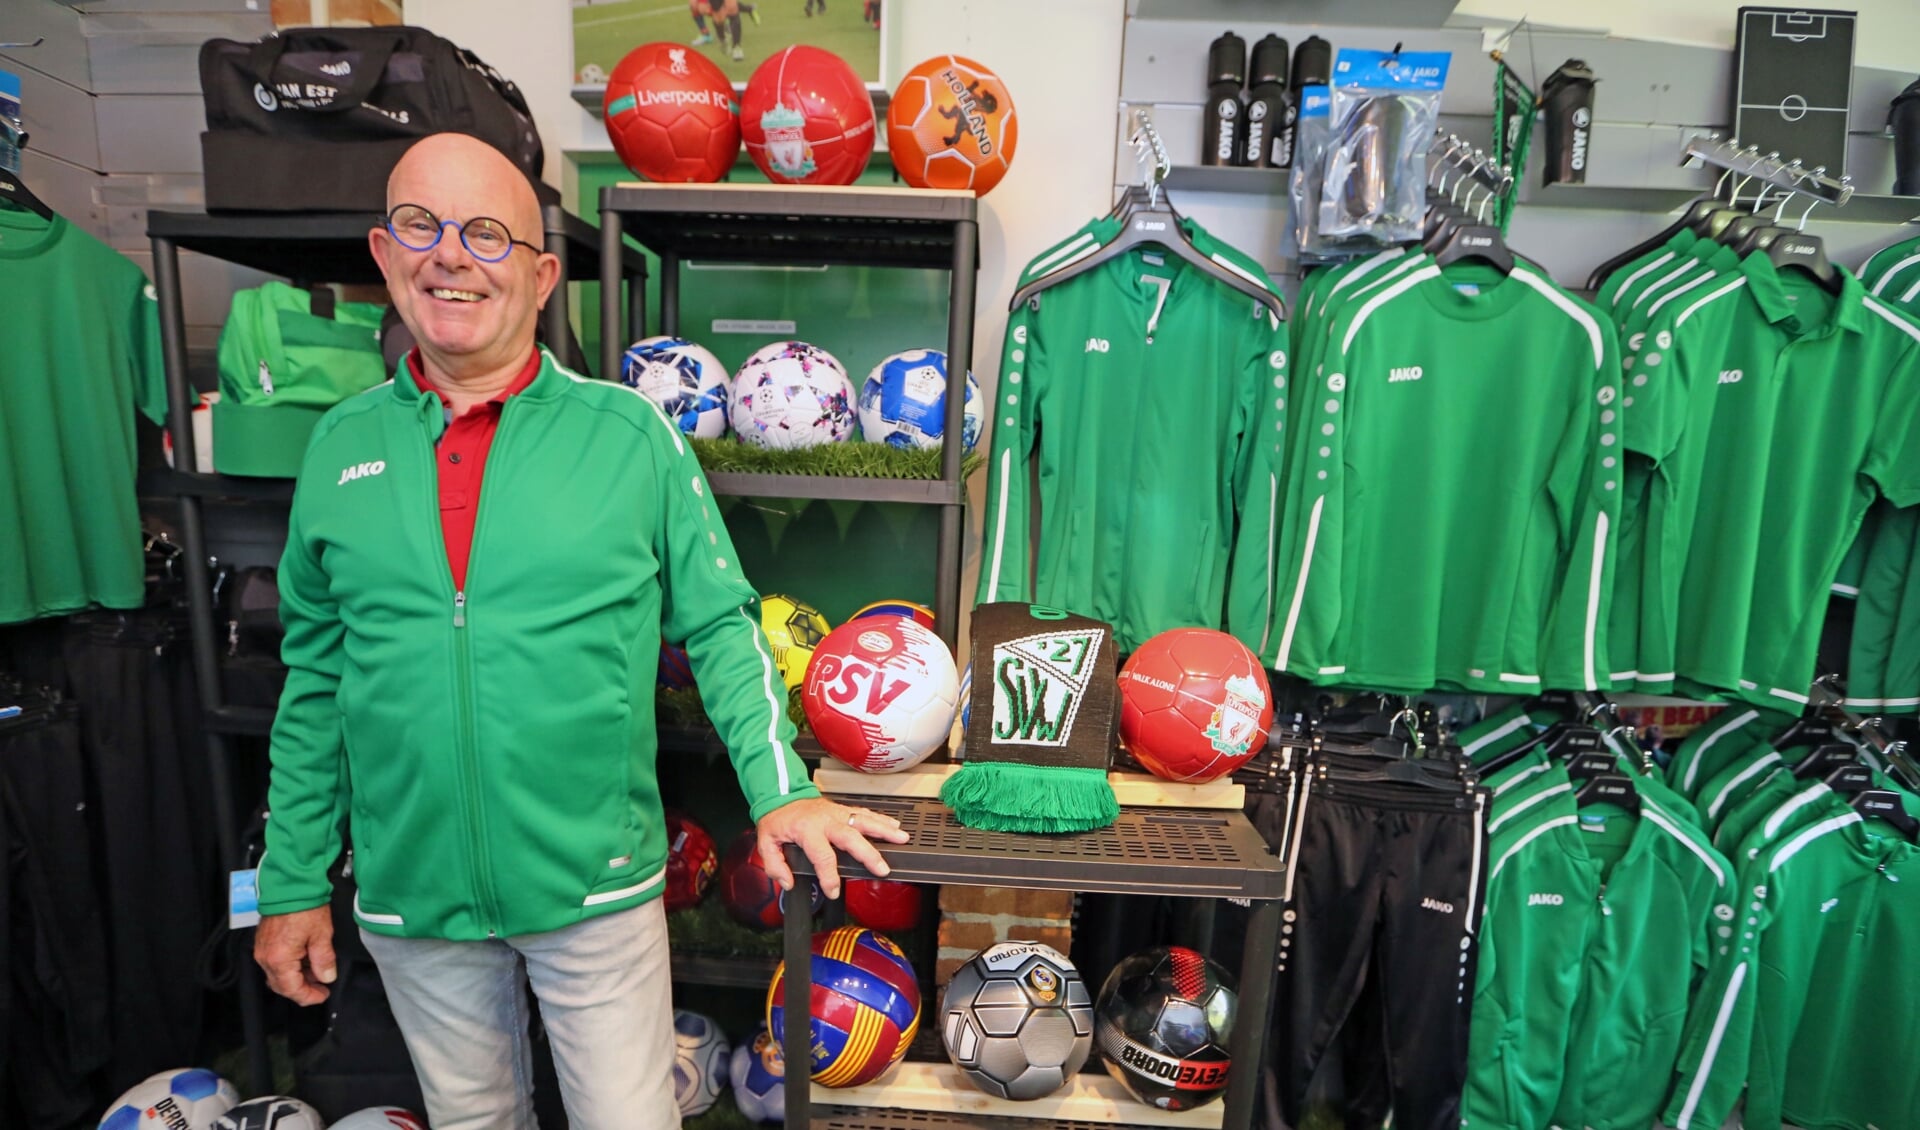 Peter de Boer in zijn kledingshop, waar diverse accessoires en SVW'27 clubkleding te koop is.